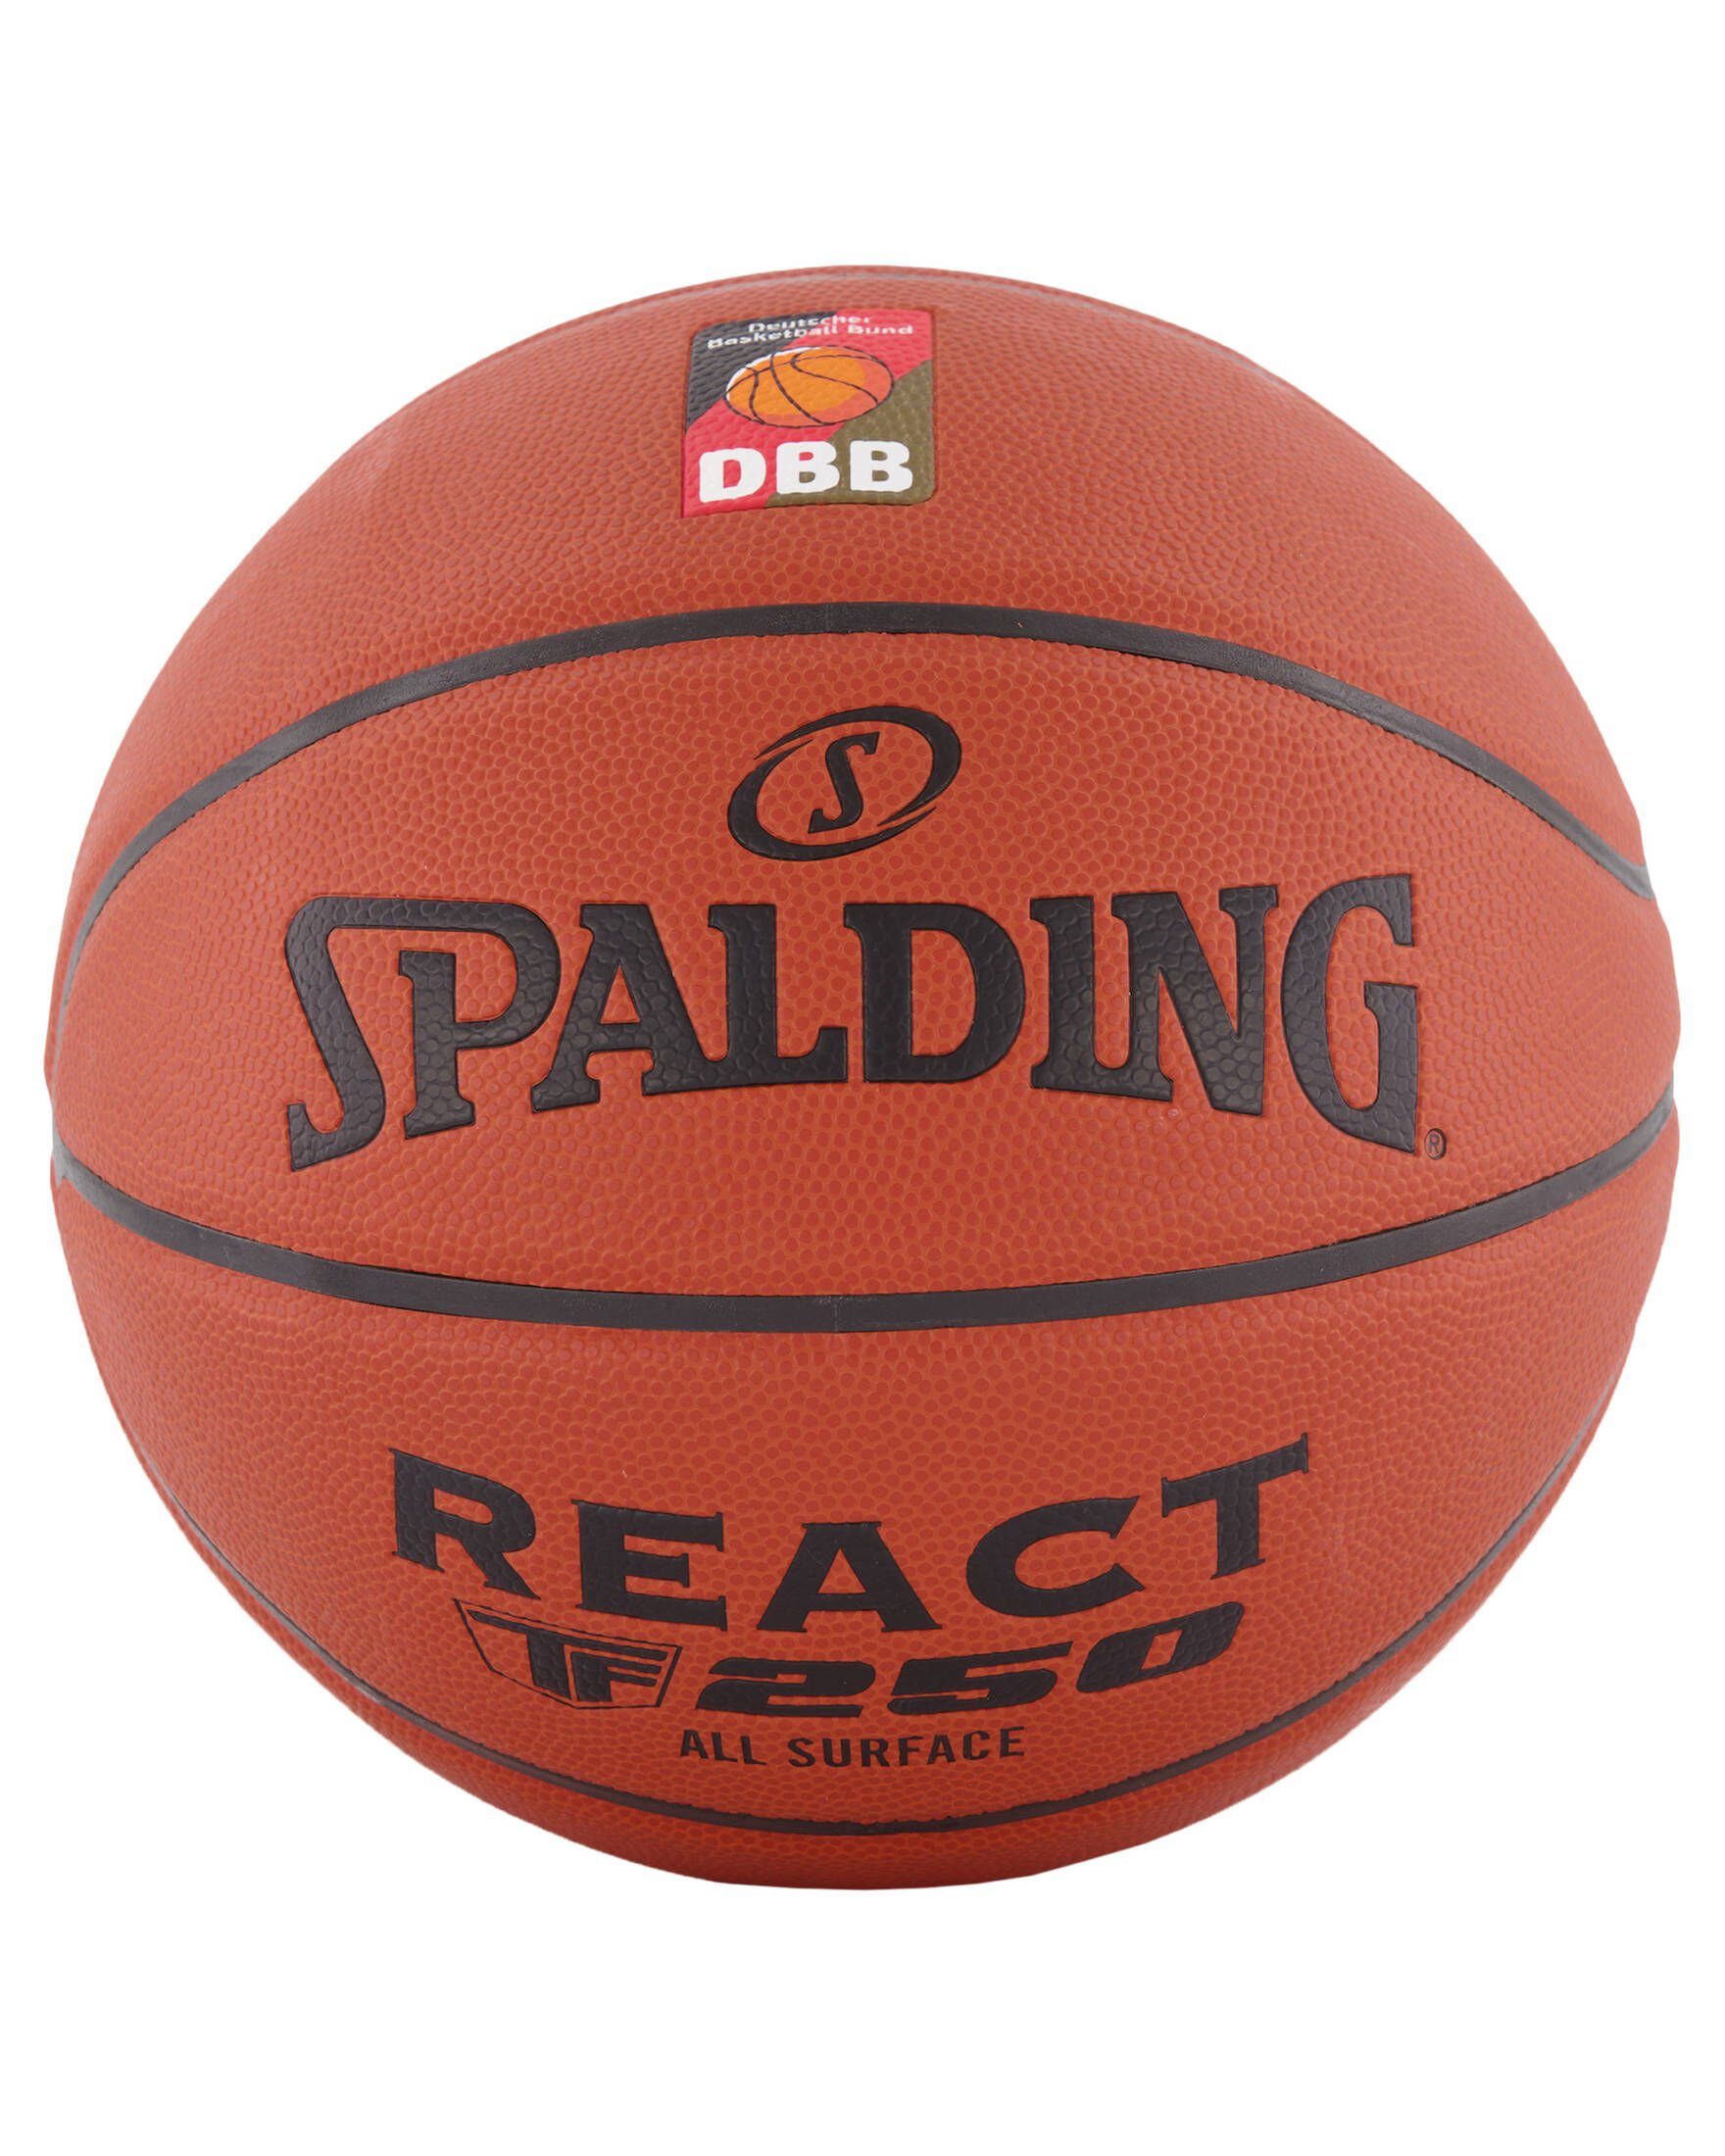 REACT 250 ORANGE Basketball SERIES Spalding Basketball TF